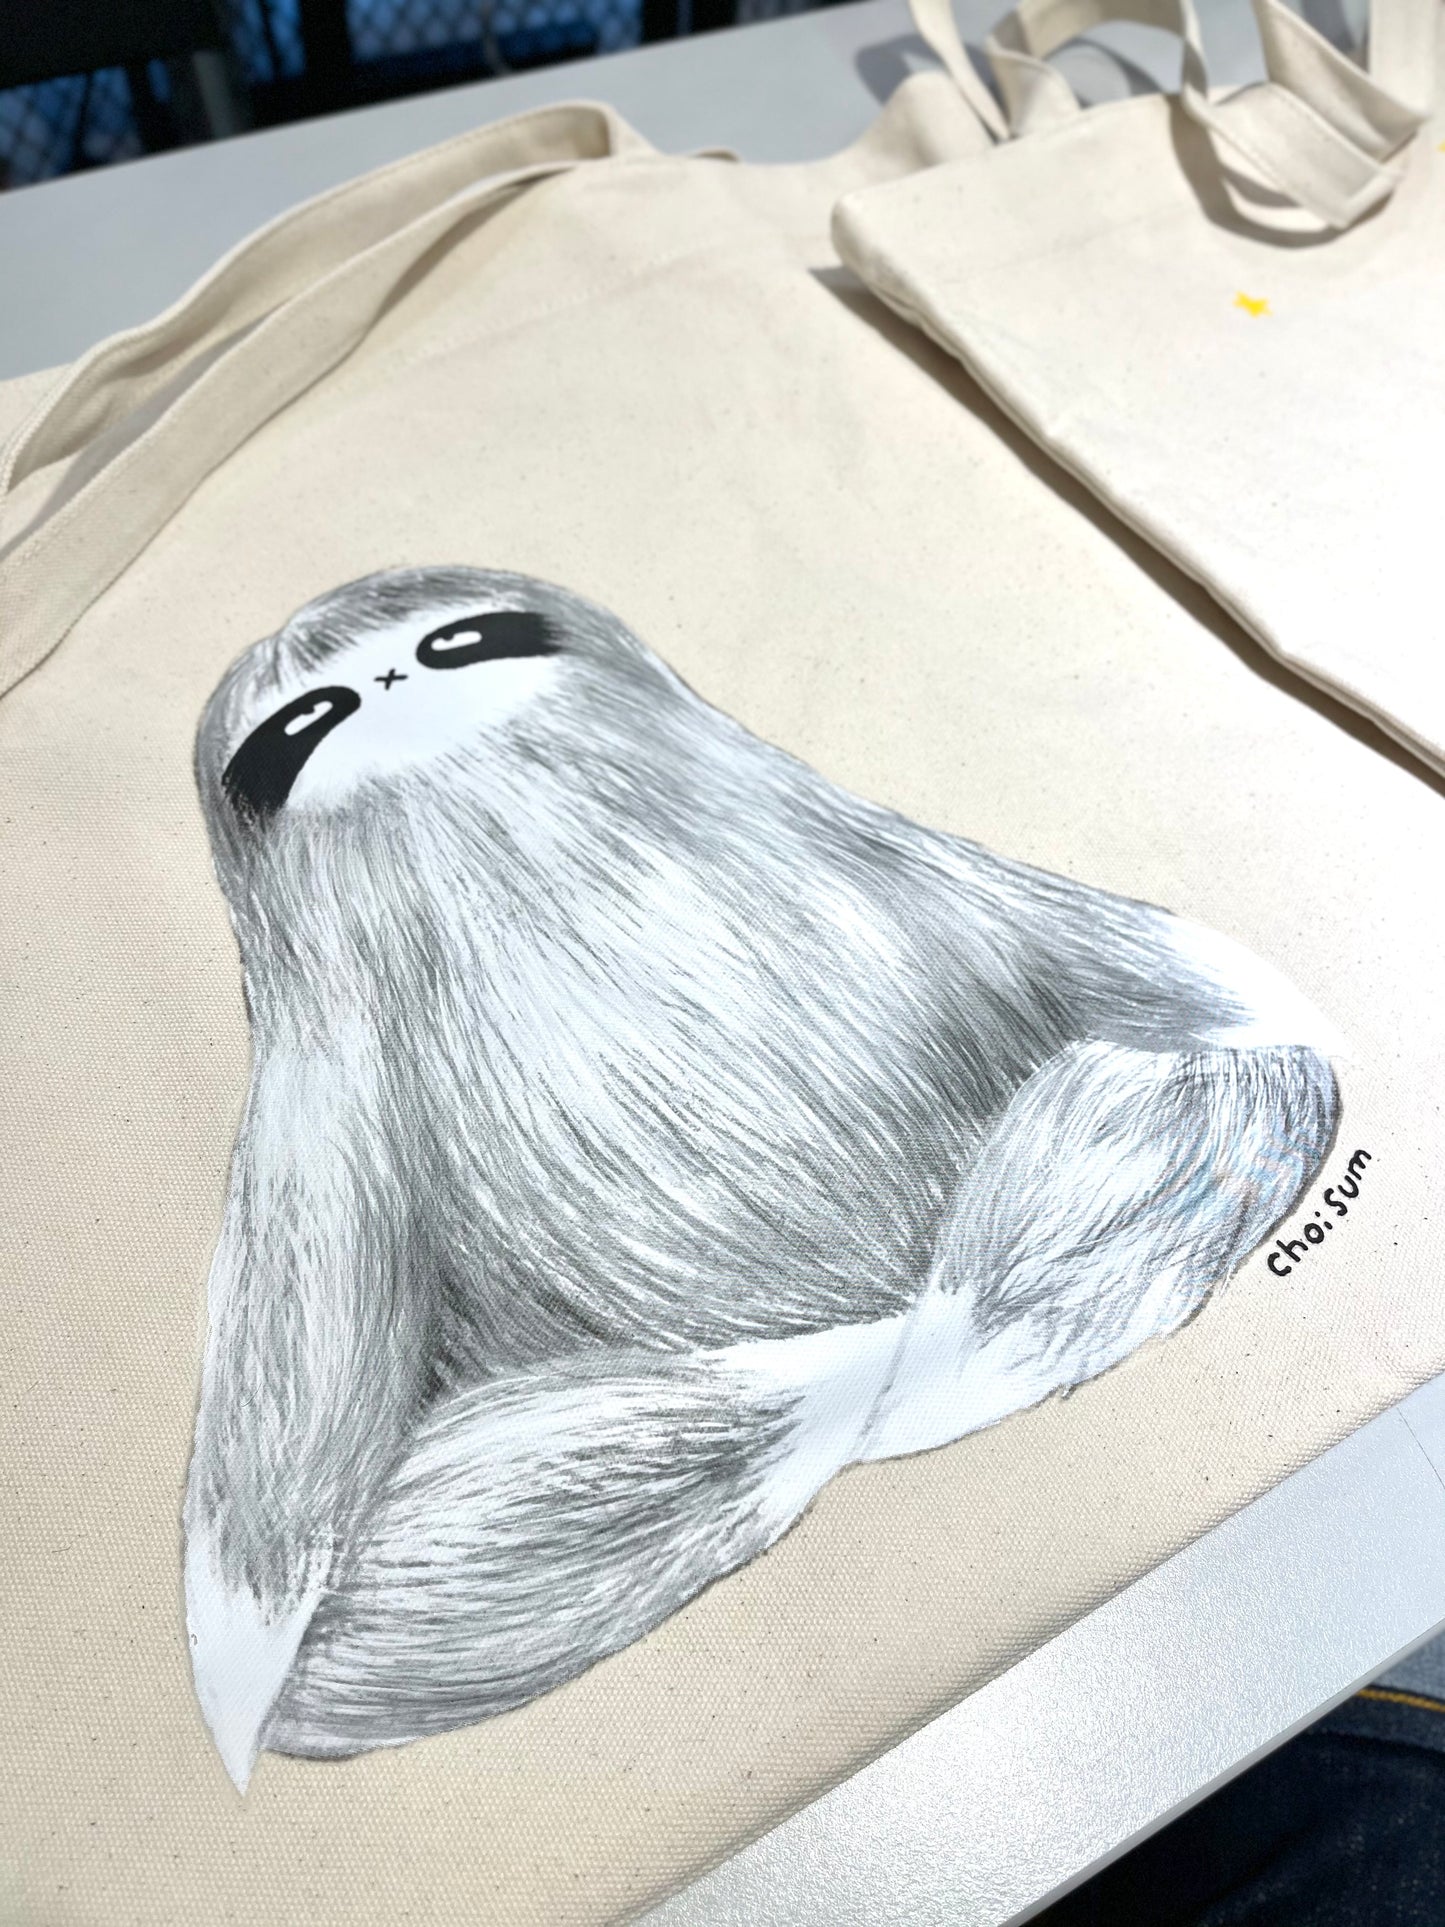 "Warm Dad" Monday Sloth Eco Bag (Type A)